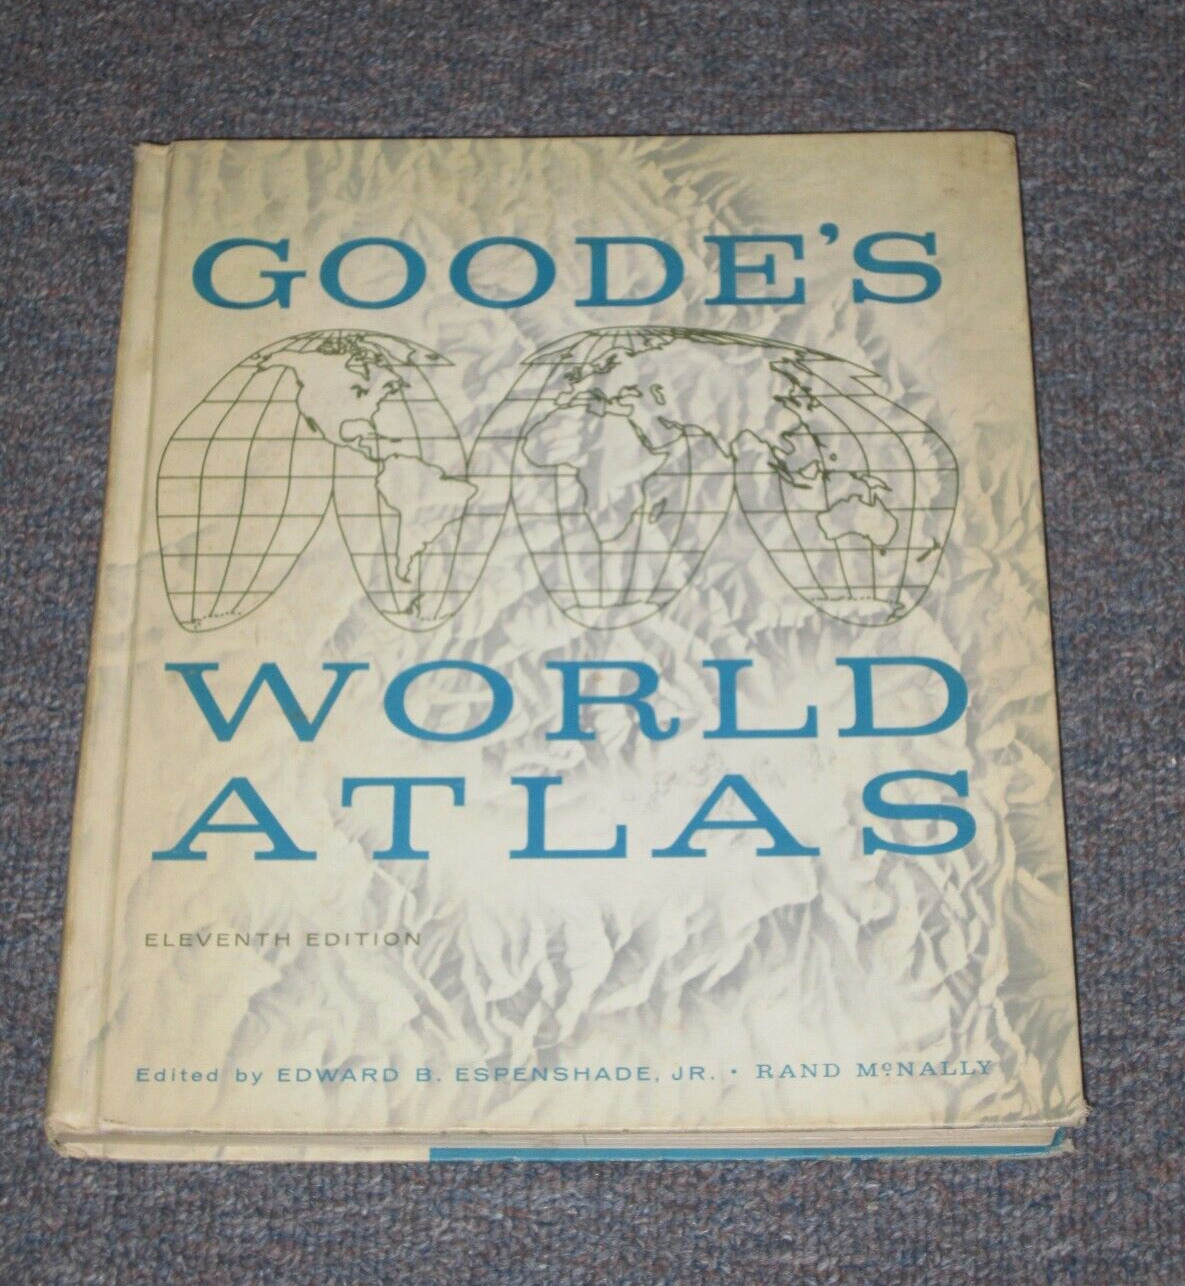 Vintage 1960 Goode’s World Atlas 11th Ed., Rand McNally hardcover   11th Edition